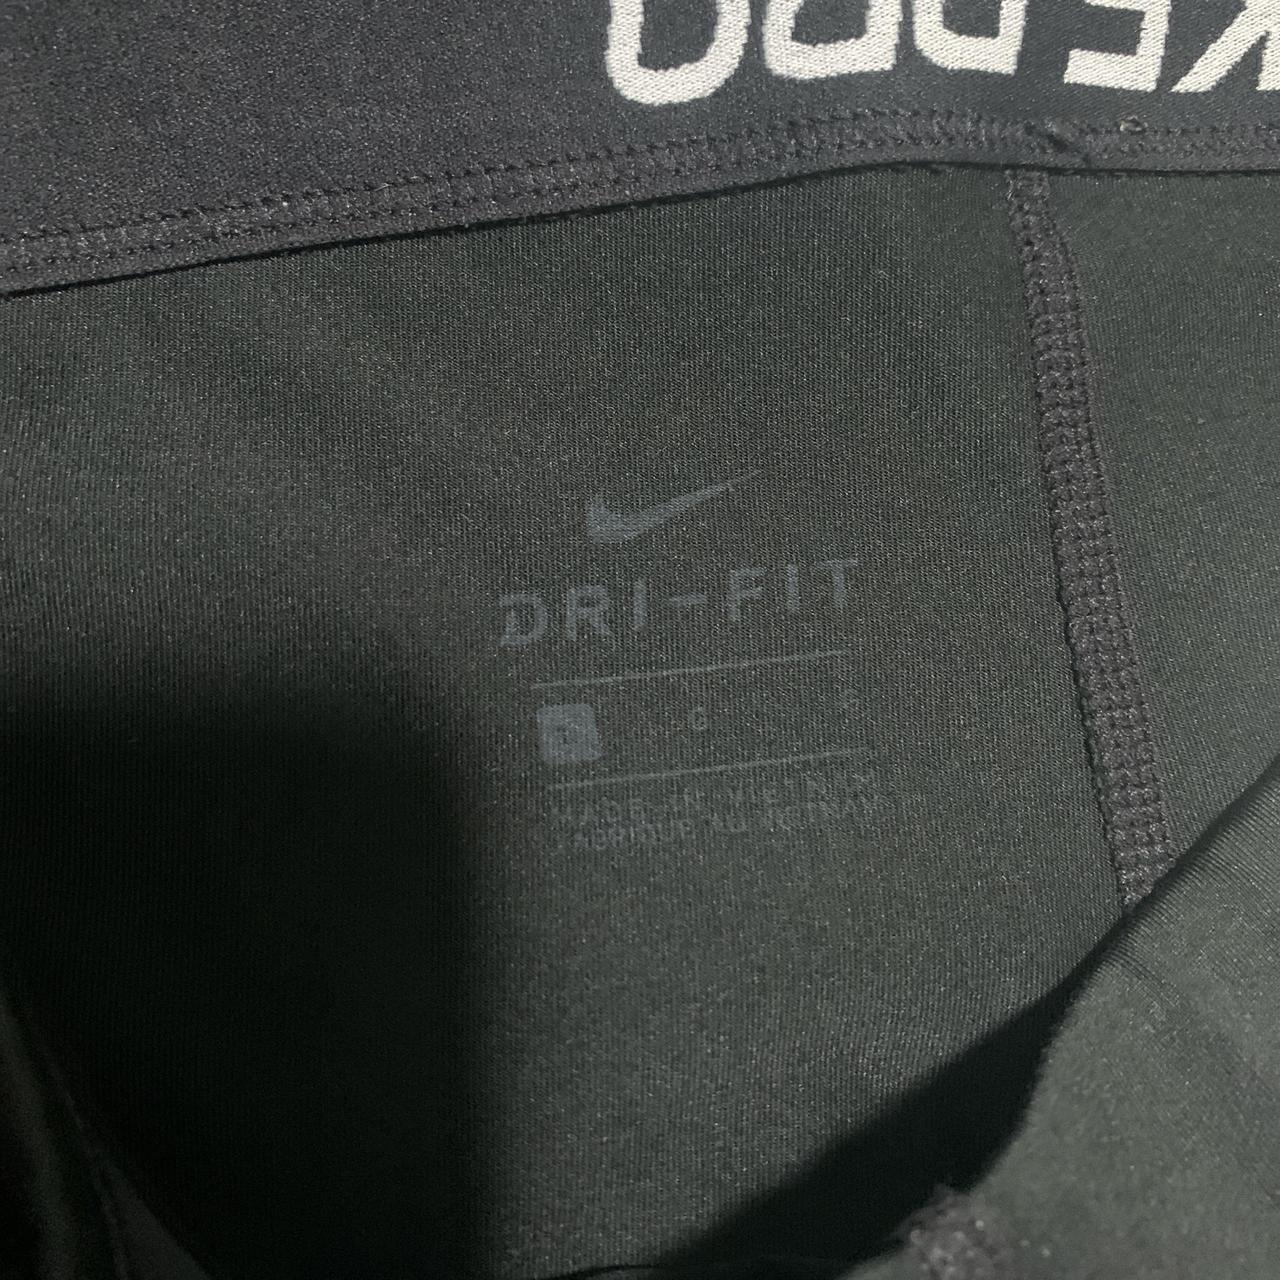 Nike leggings Size L Rarely worn No rips Thin - Depop